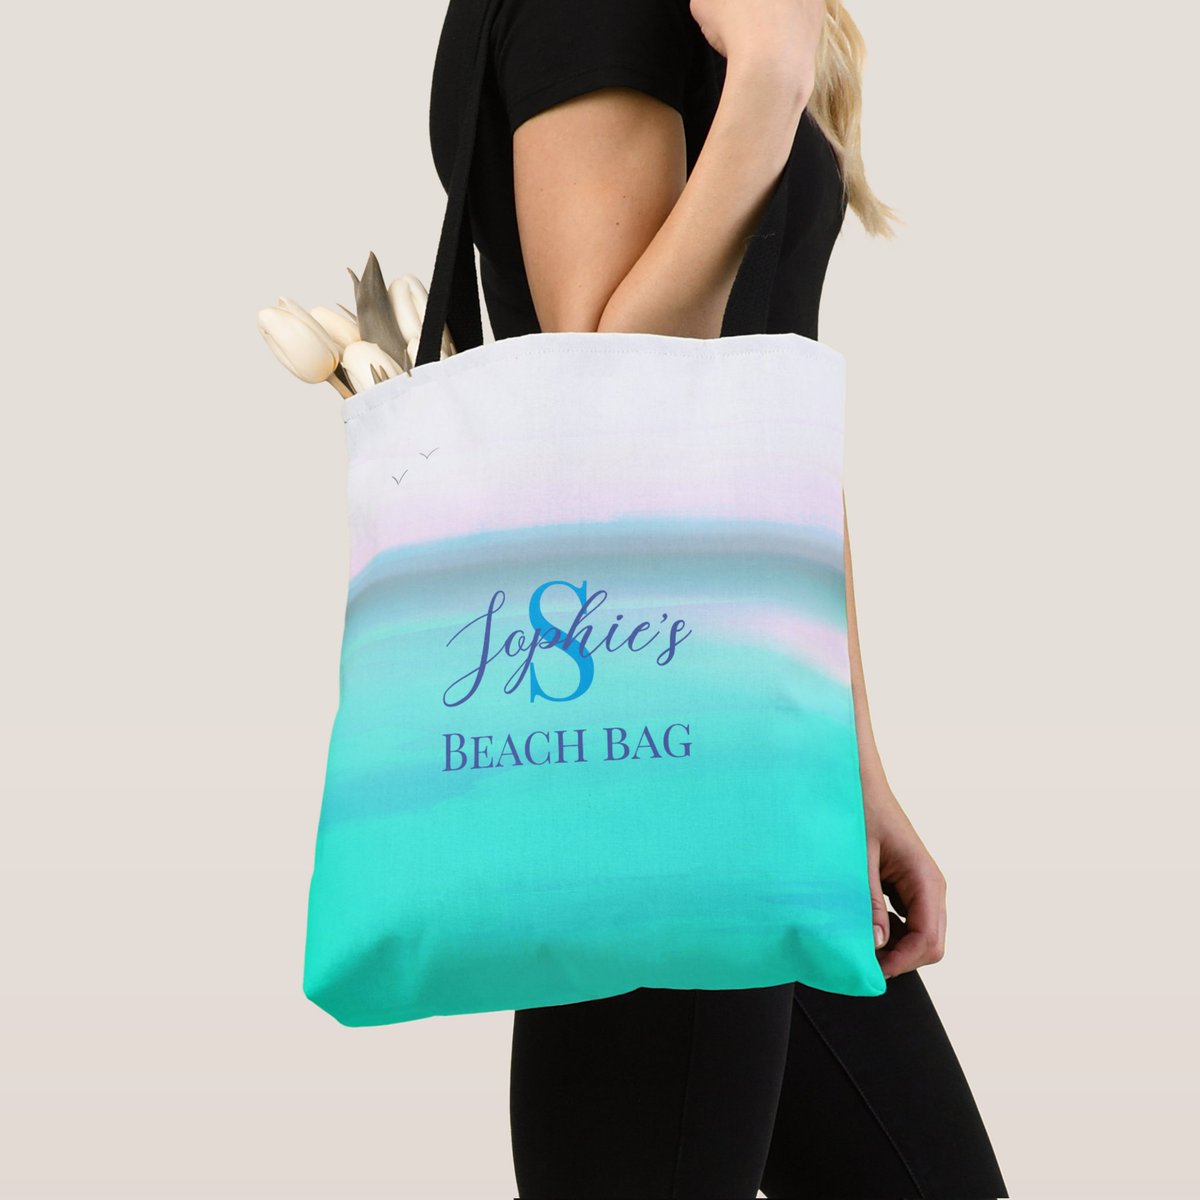 Beautiful tote bags

zazzle.com/modern_hot_pin…
zazzle.com/beach_bag_with…

#totebag #totebags #bagsforwomen #summerbags #giftsforwomen #giftsforher #geschenkefürsie #bags #bag #giftsforgirlfriend #womenbags #giftforgirlfriend